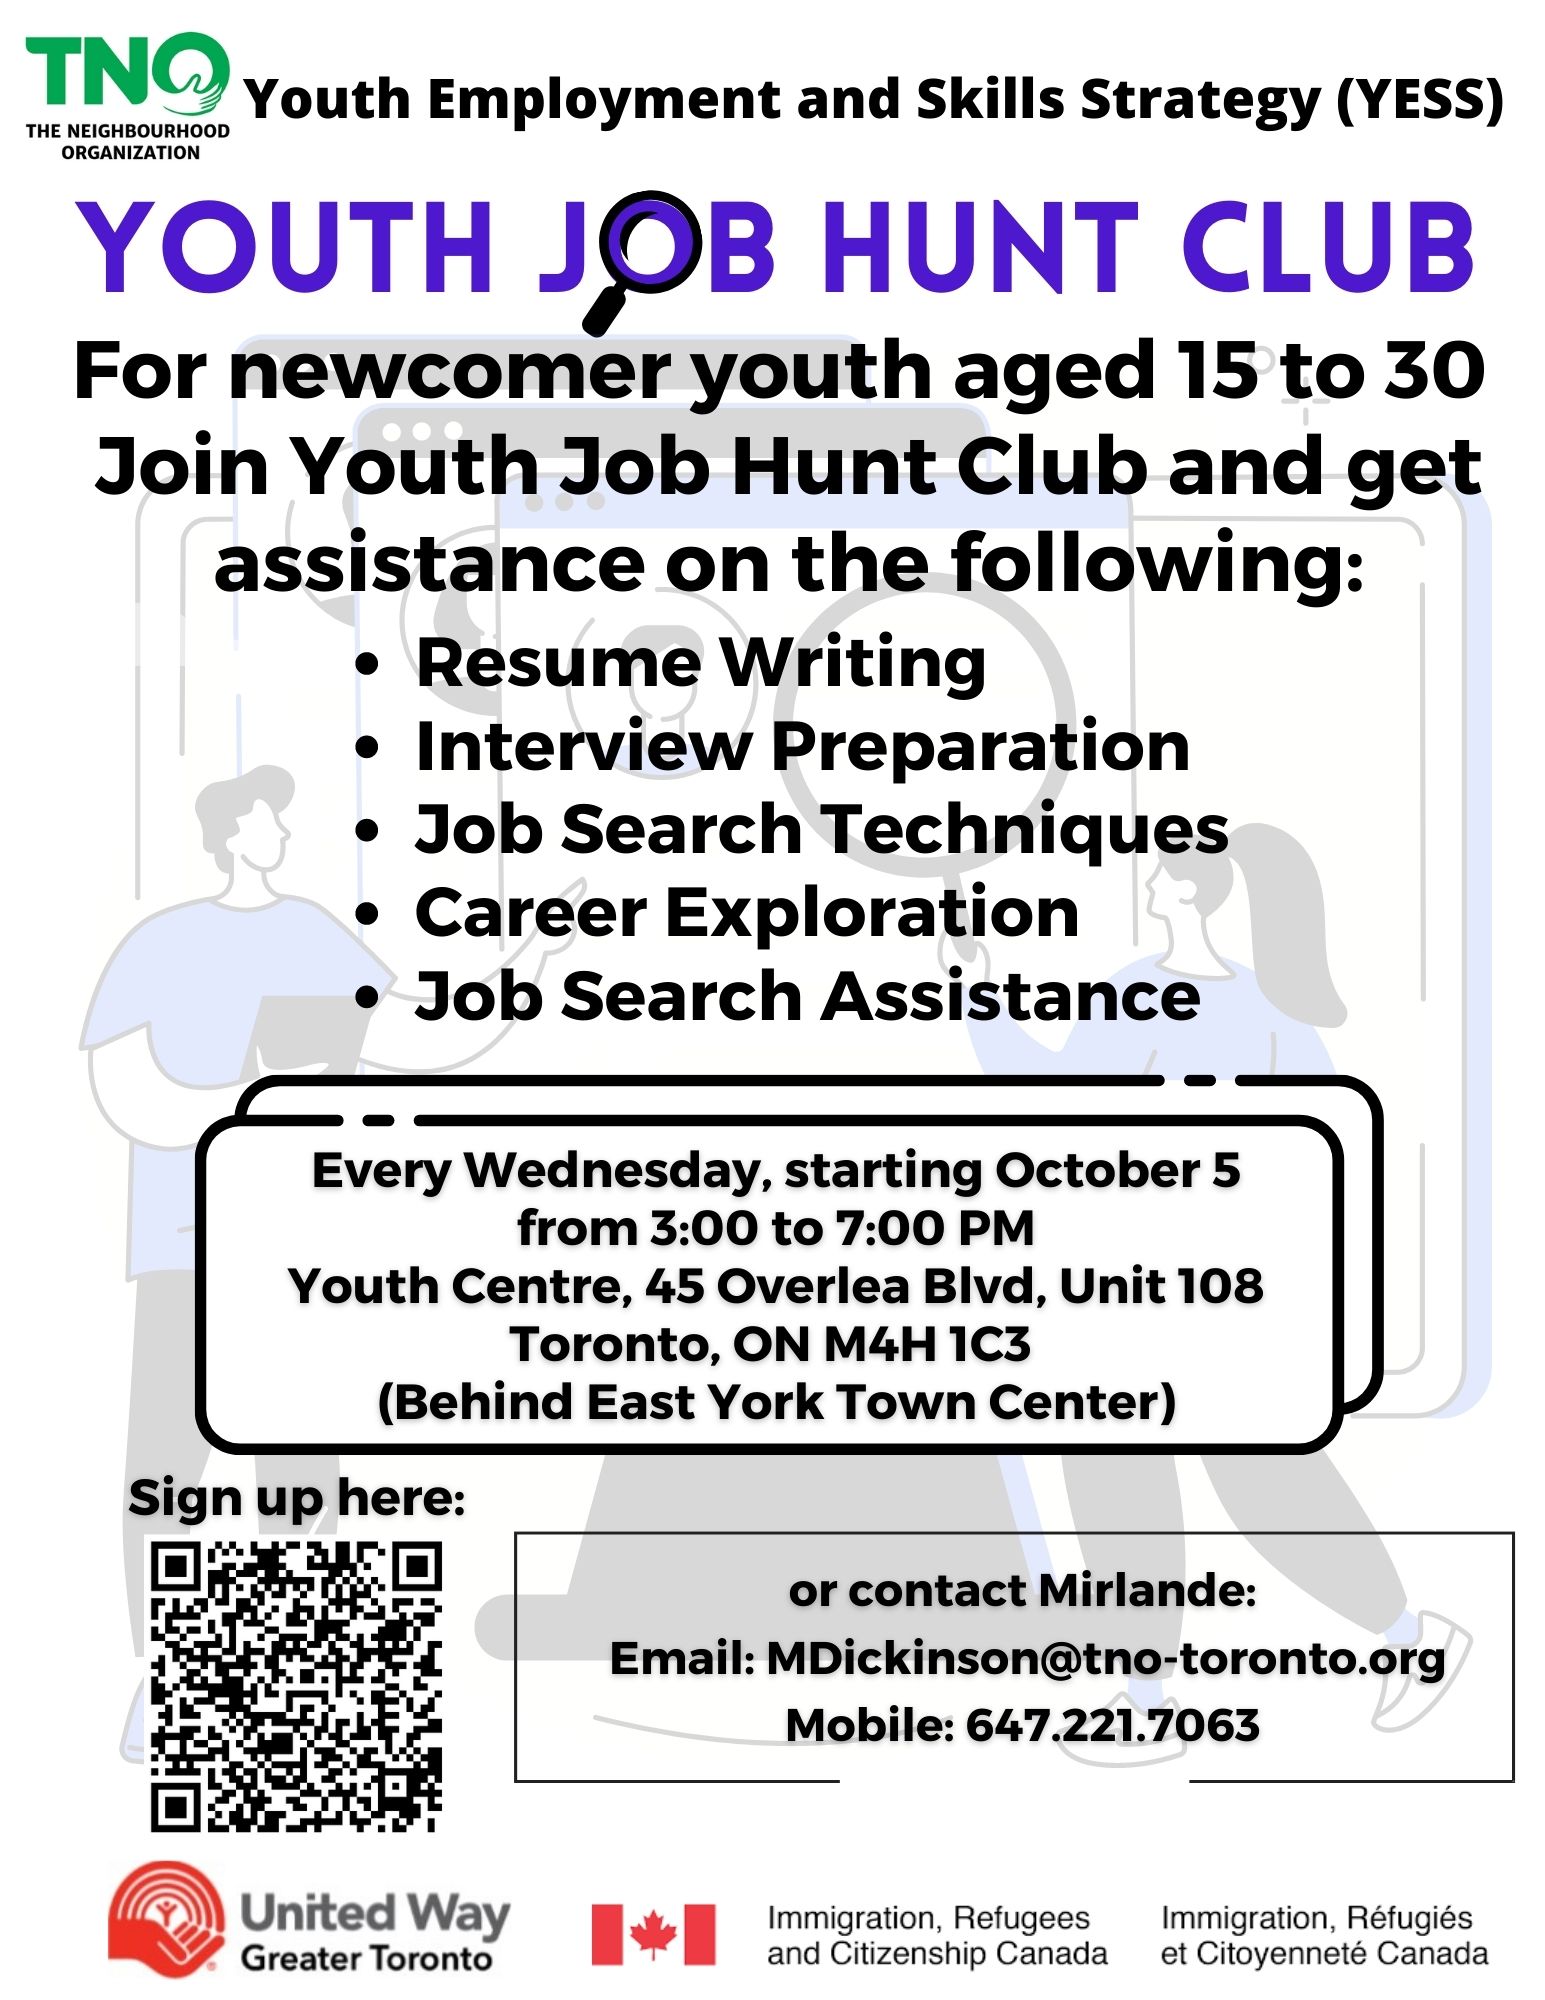 Youth job hunt club